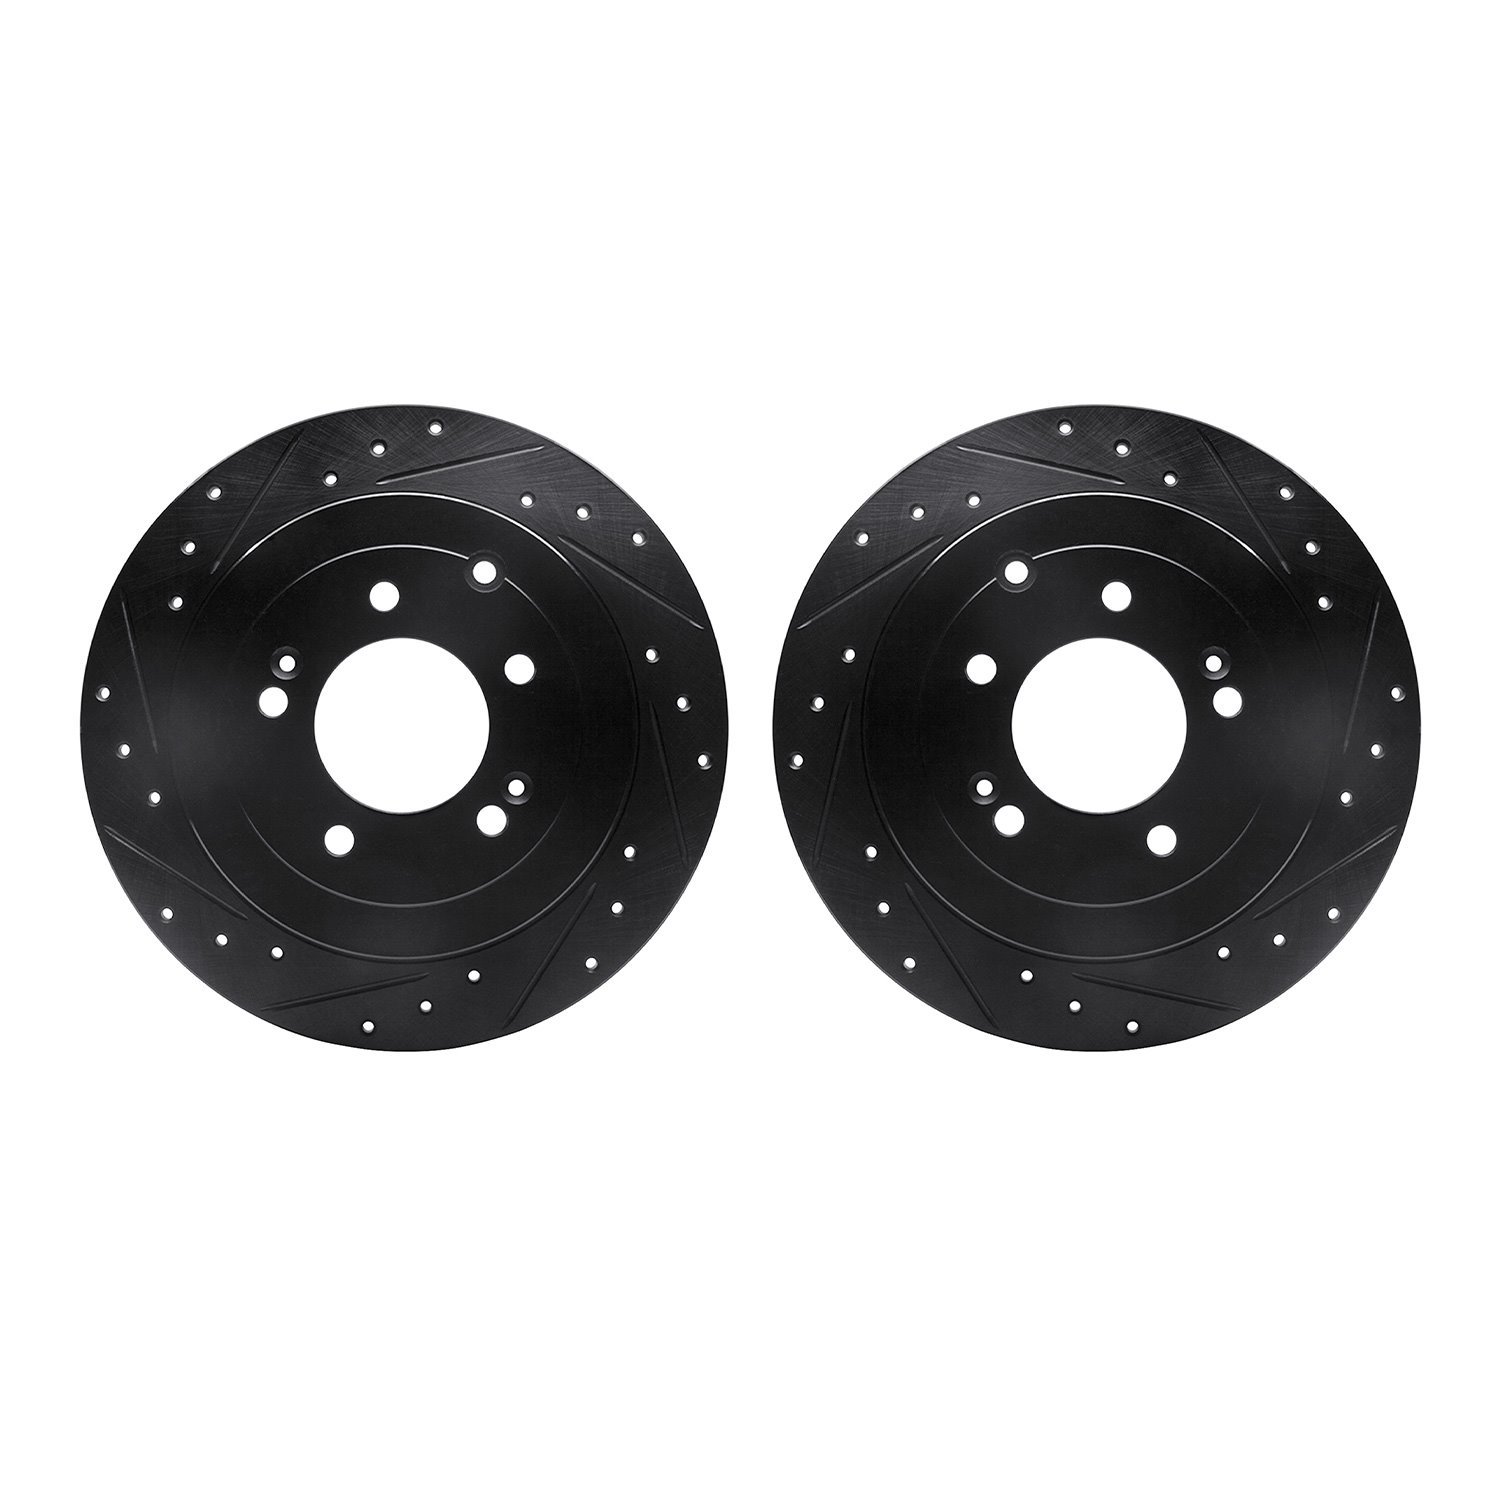 Drilled/Slotted Brake Rotors [Black], Fits Select Kia/Hyundai/Genesis